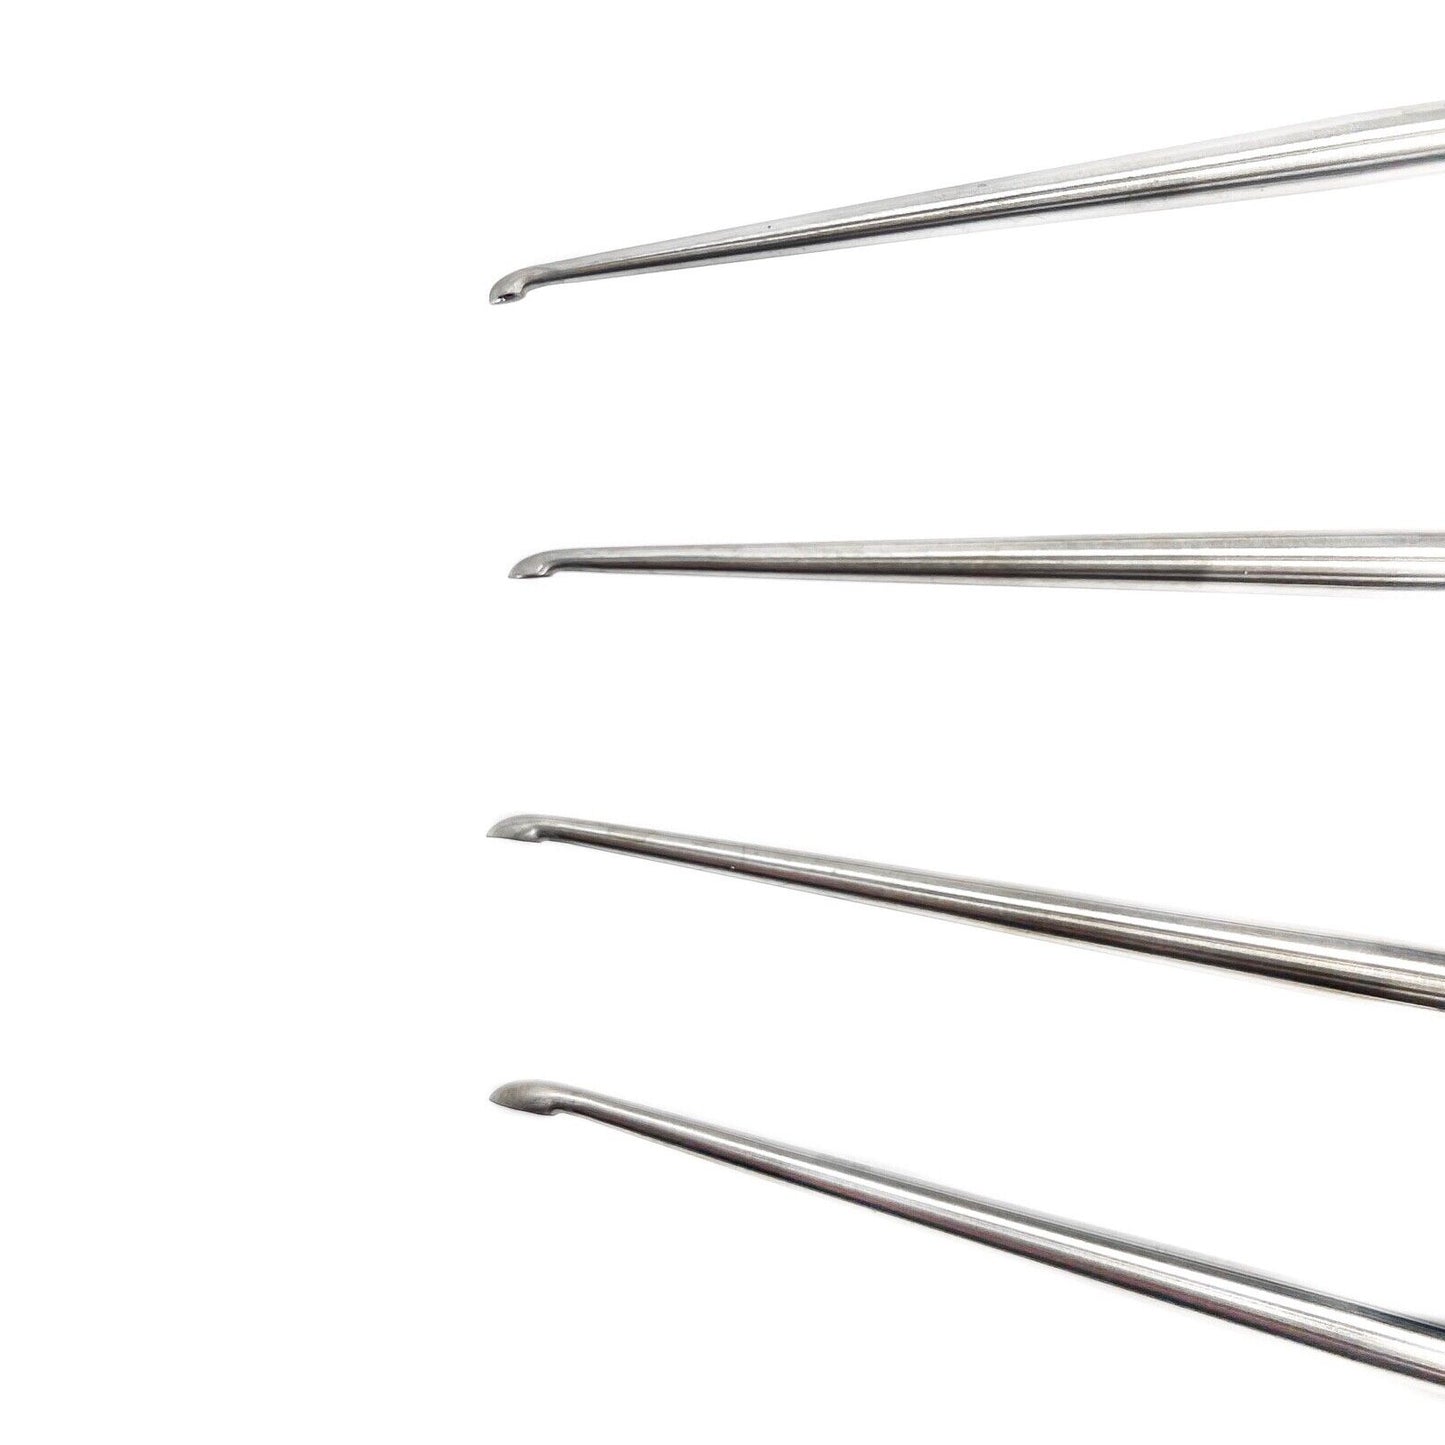 Codman, Microdiscectomy KARLIN Backward Curette Instrument Set with Case